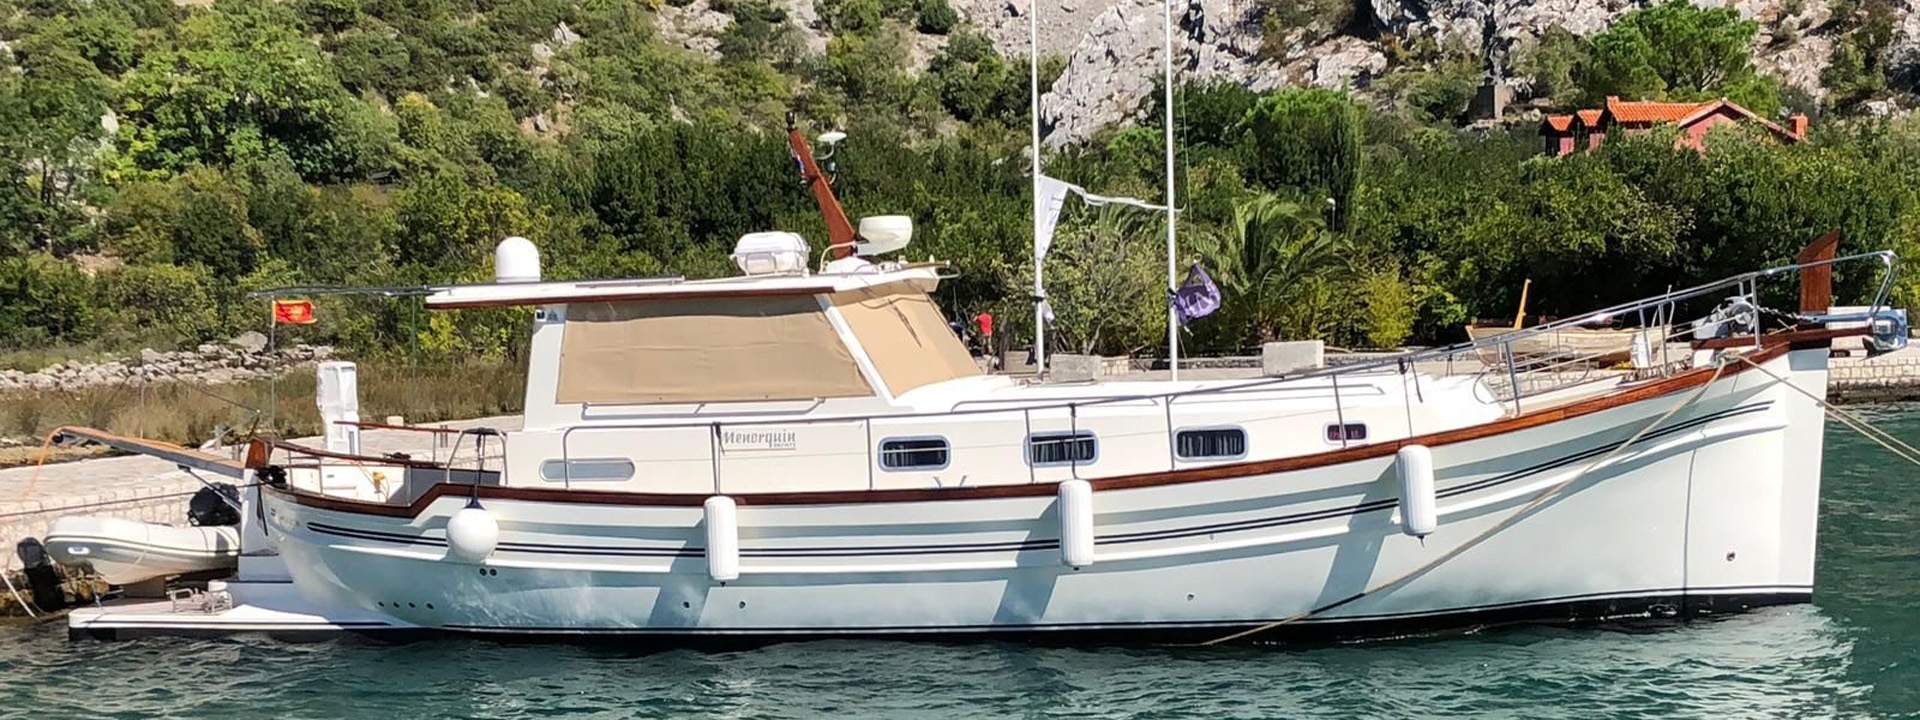 Menorquin Yacht 160